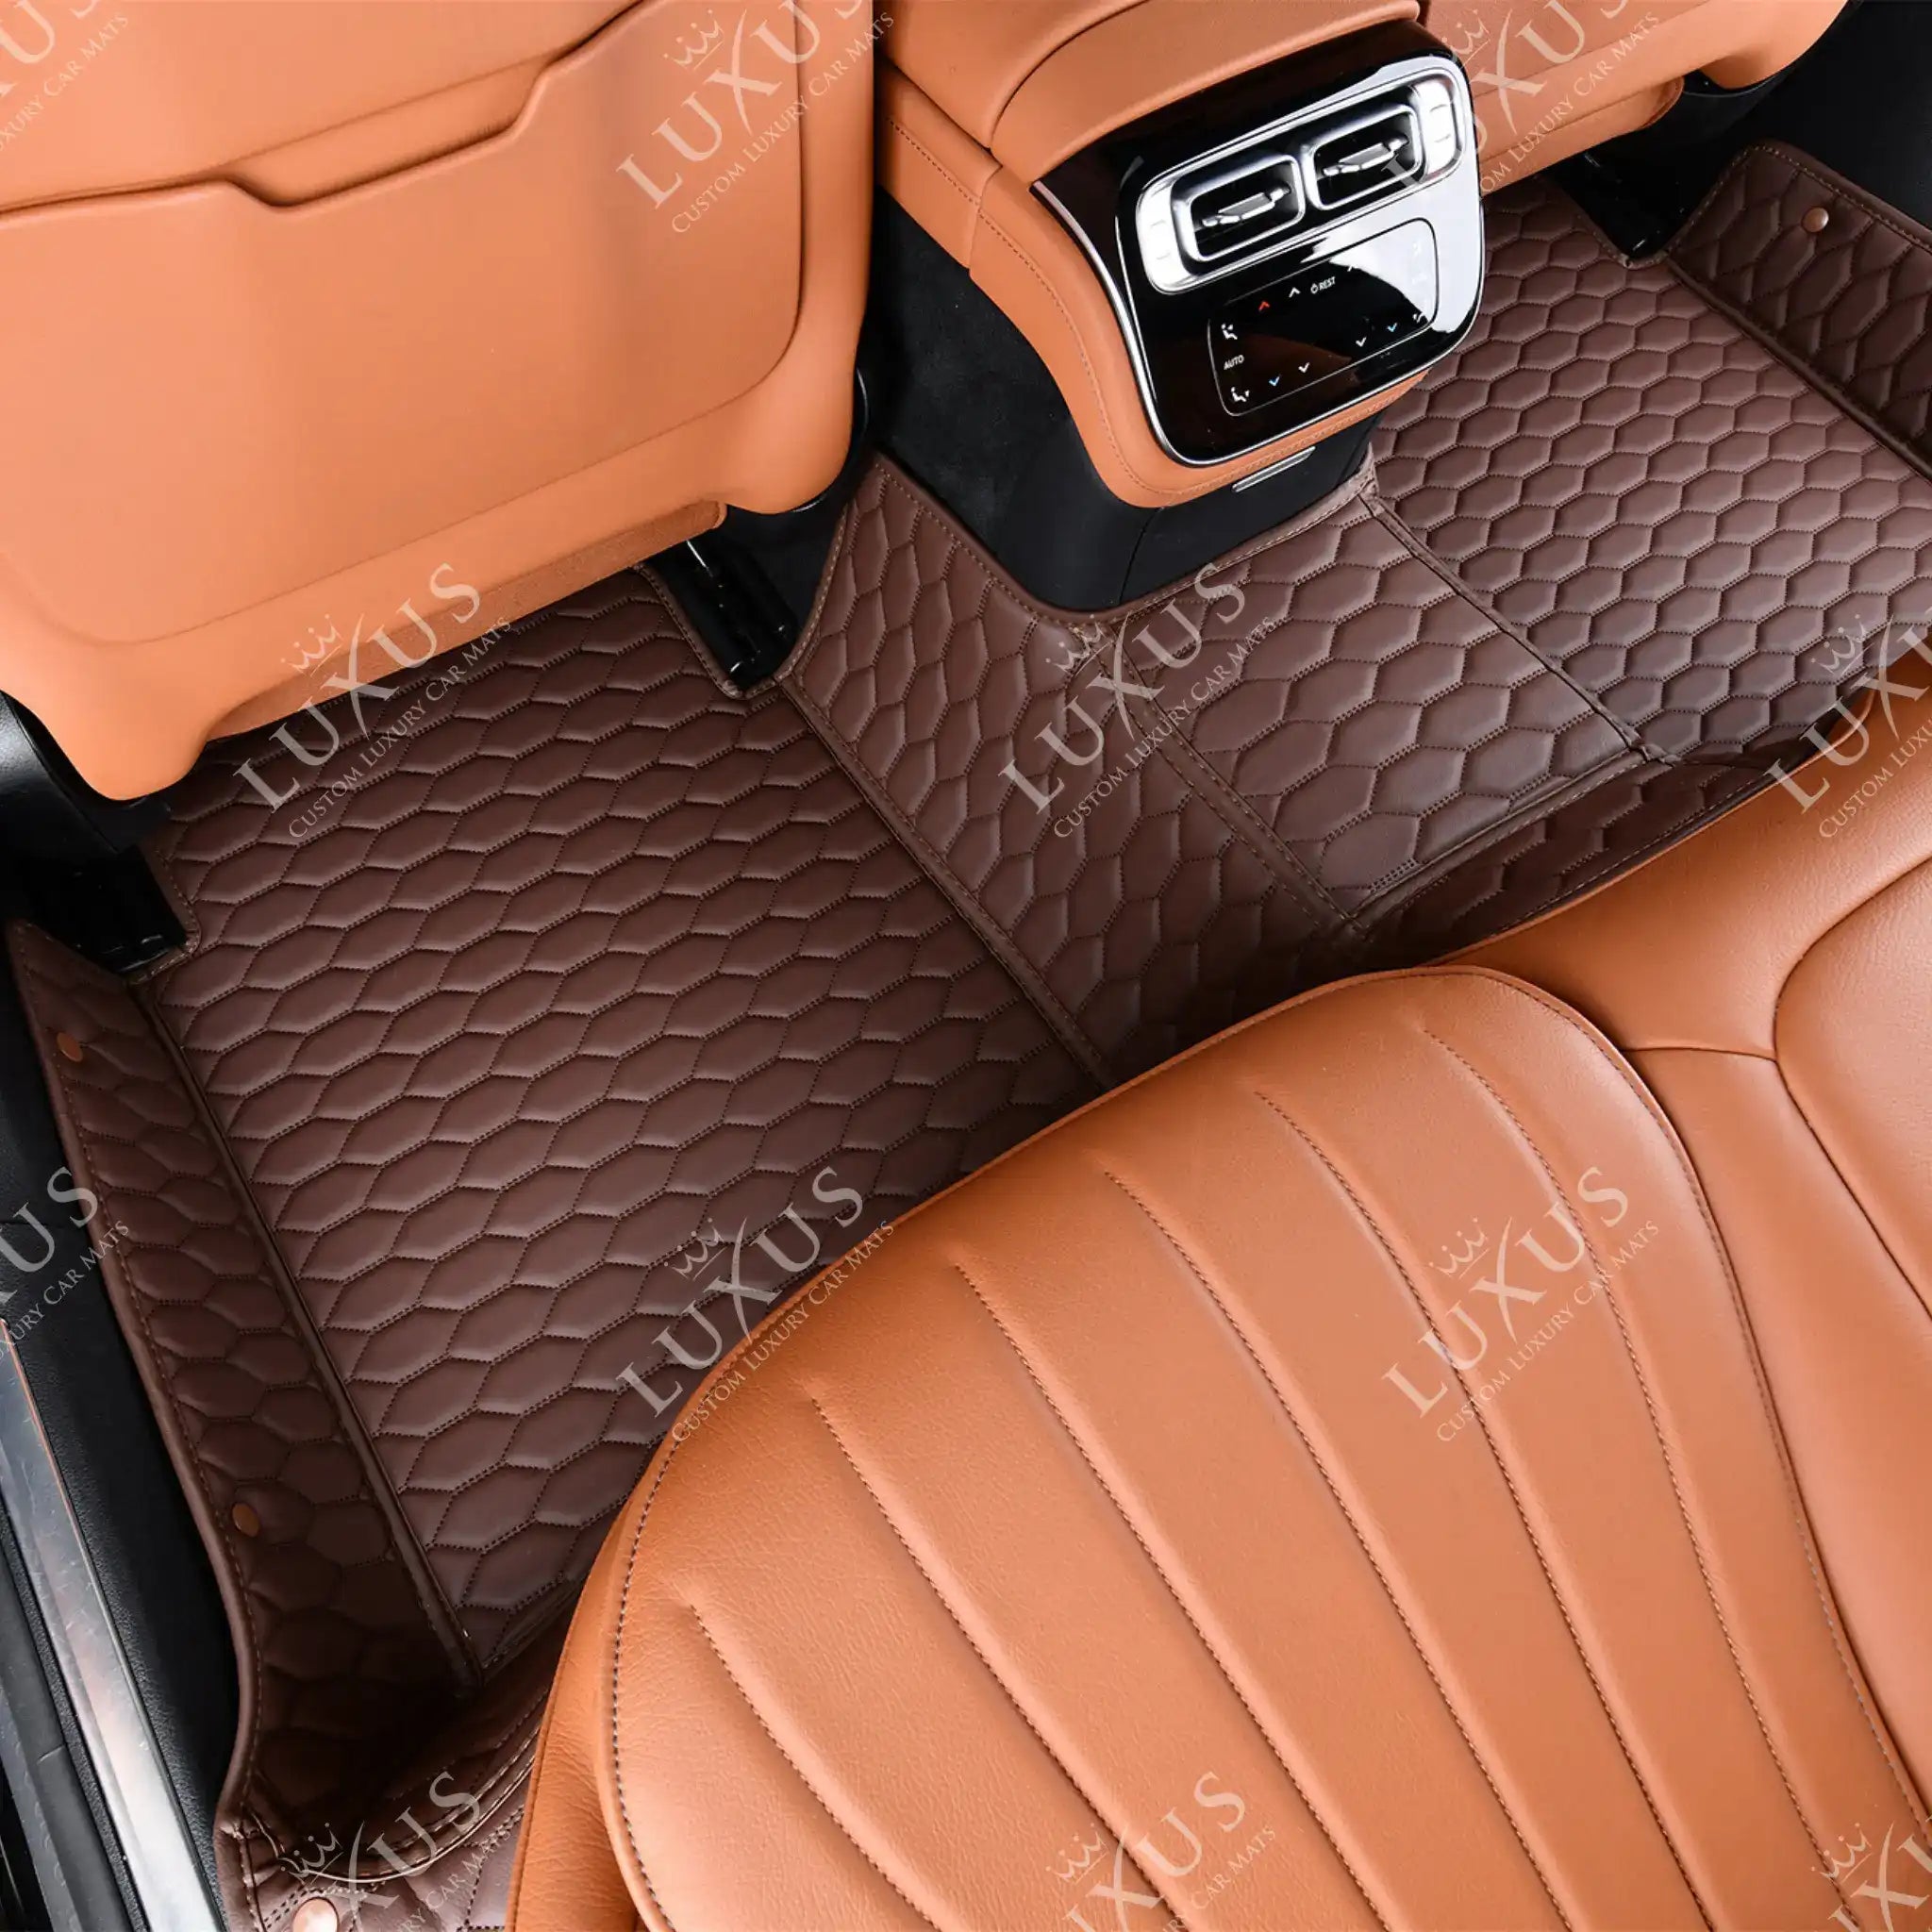 NEW Chocolate Brown Honeycomb Luxury Car Mats Set